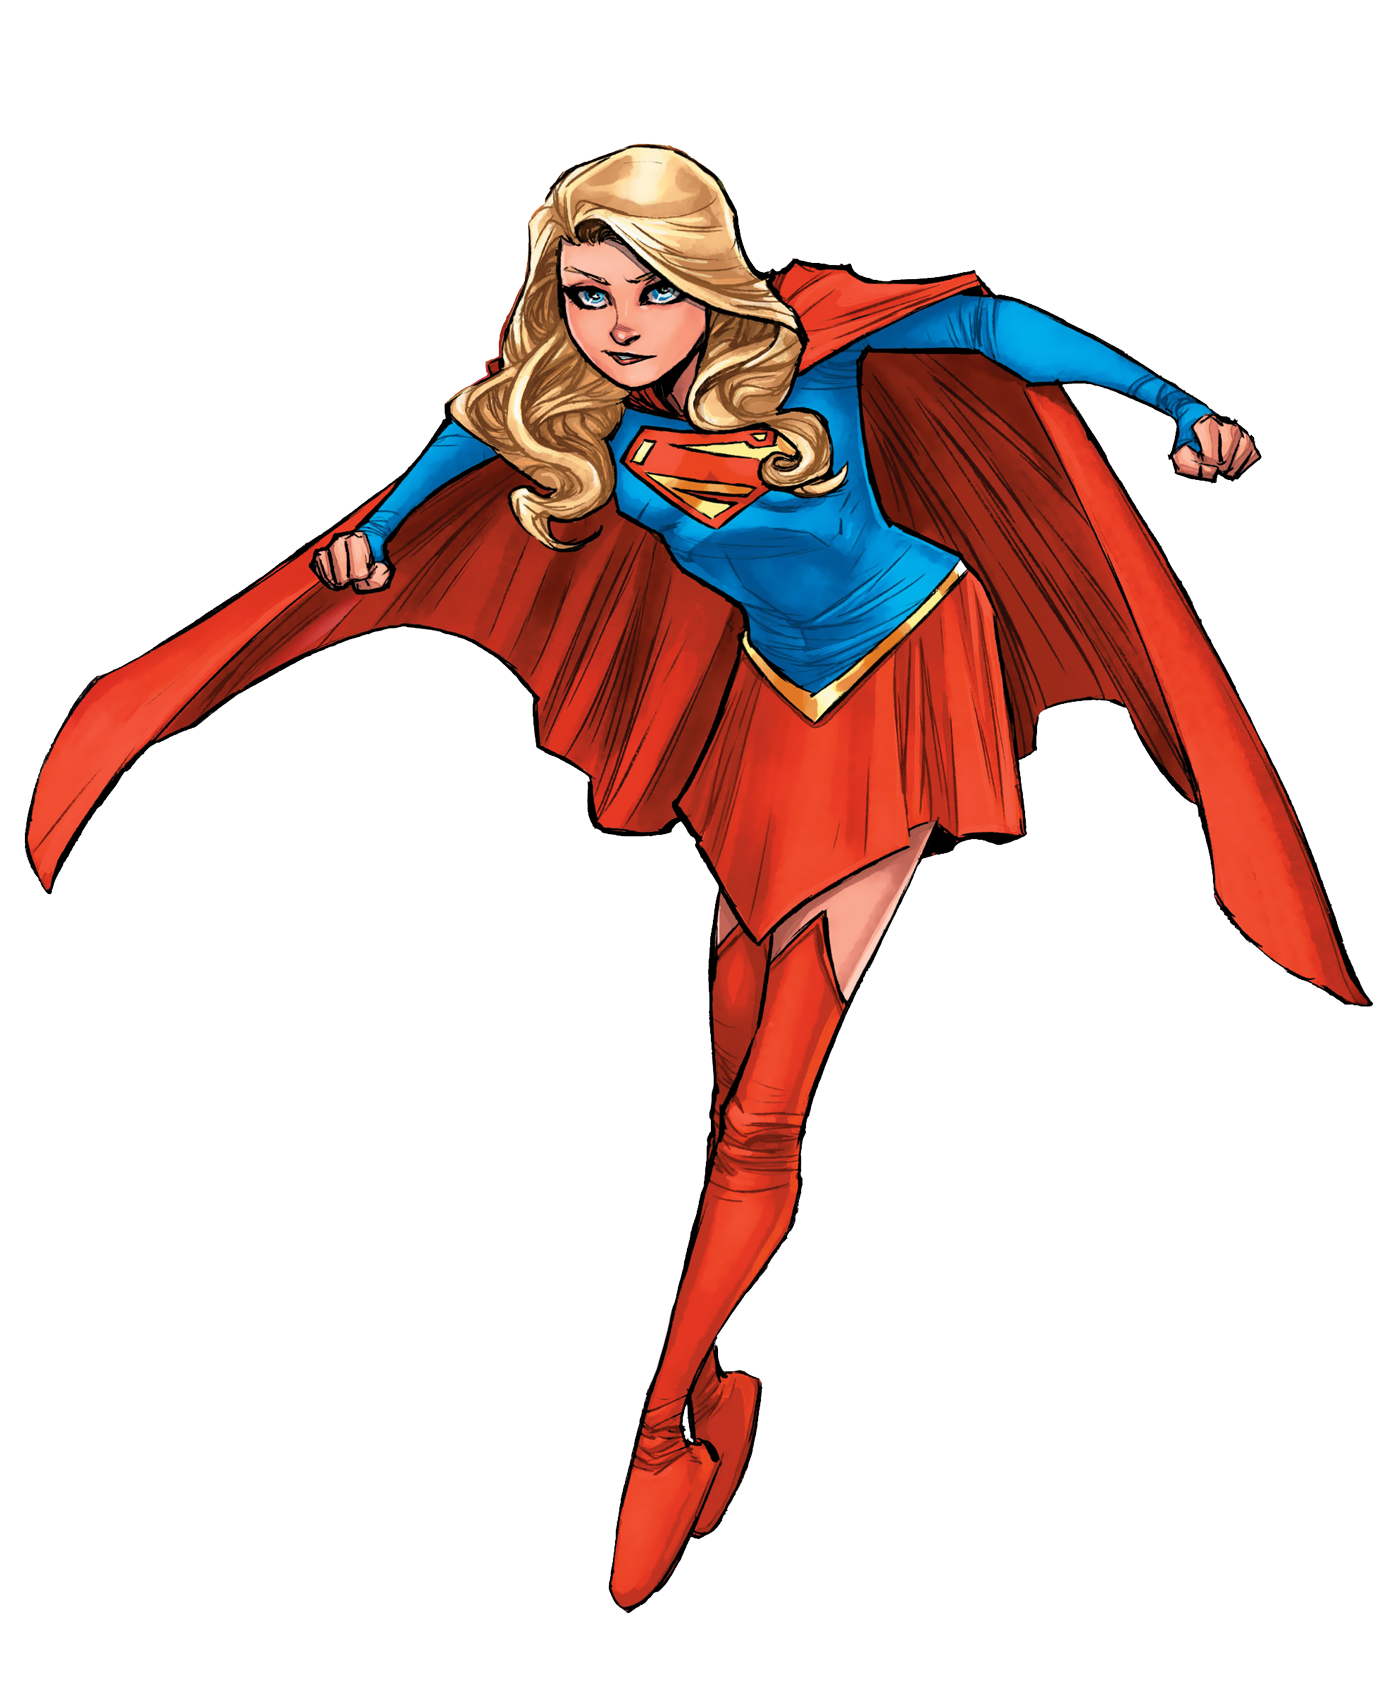 Supergirl' Flies Again As Warner Bros. Plans a New Movie - Movie News Net